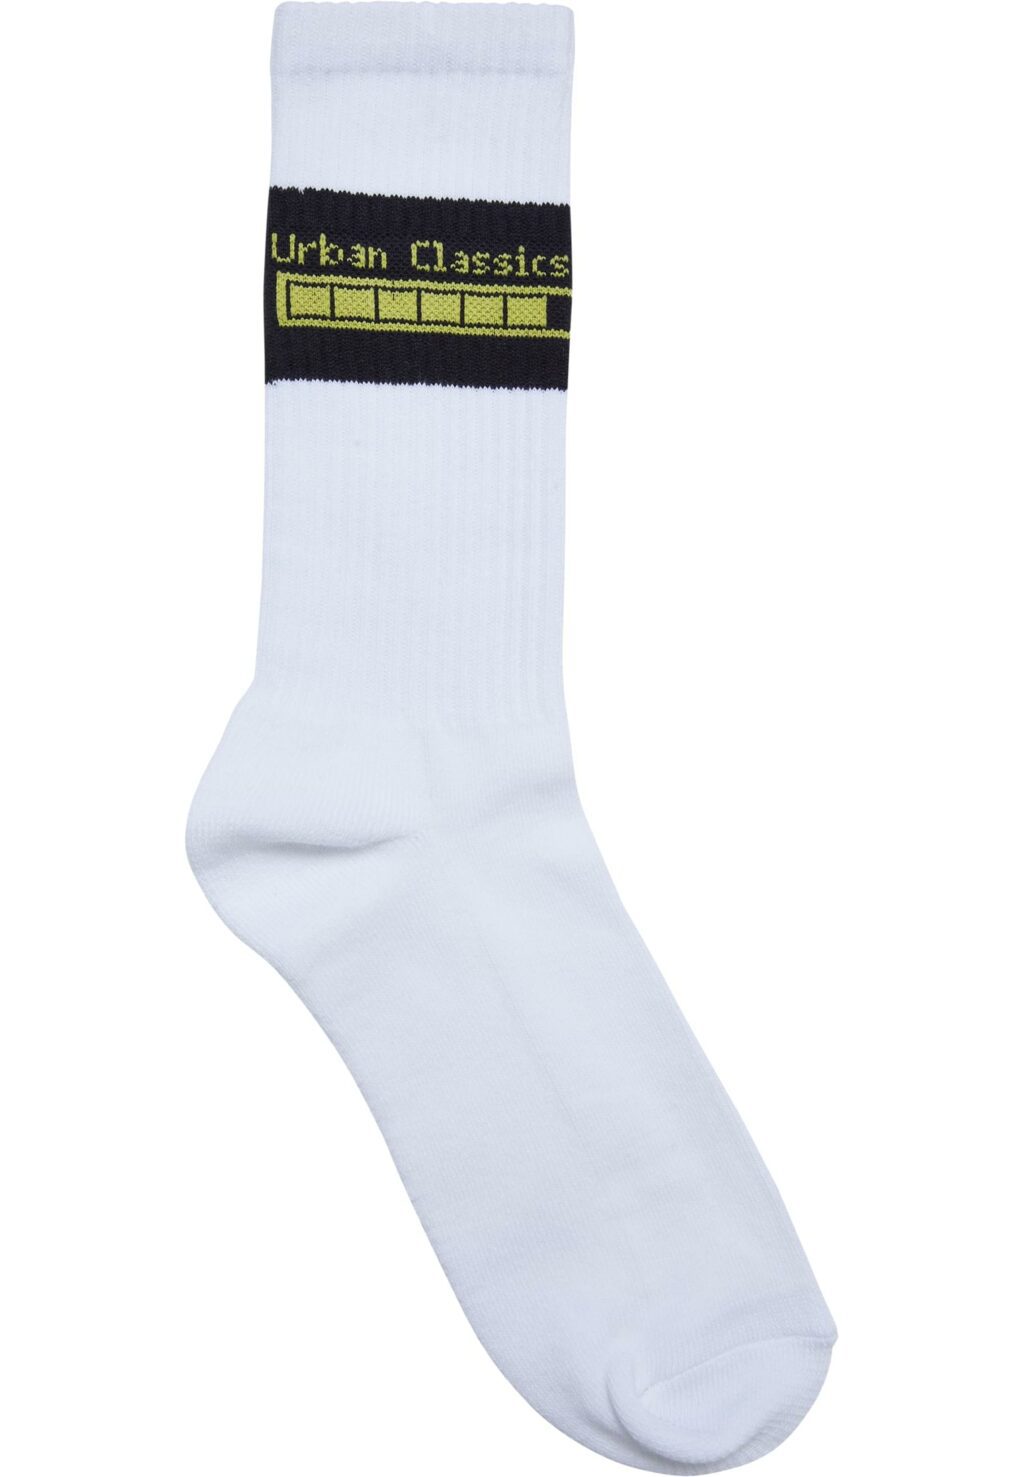 Loading Socks 3-Pack white/black/frozenyellow TB6546